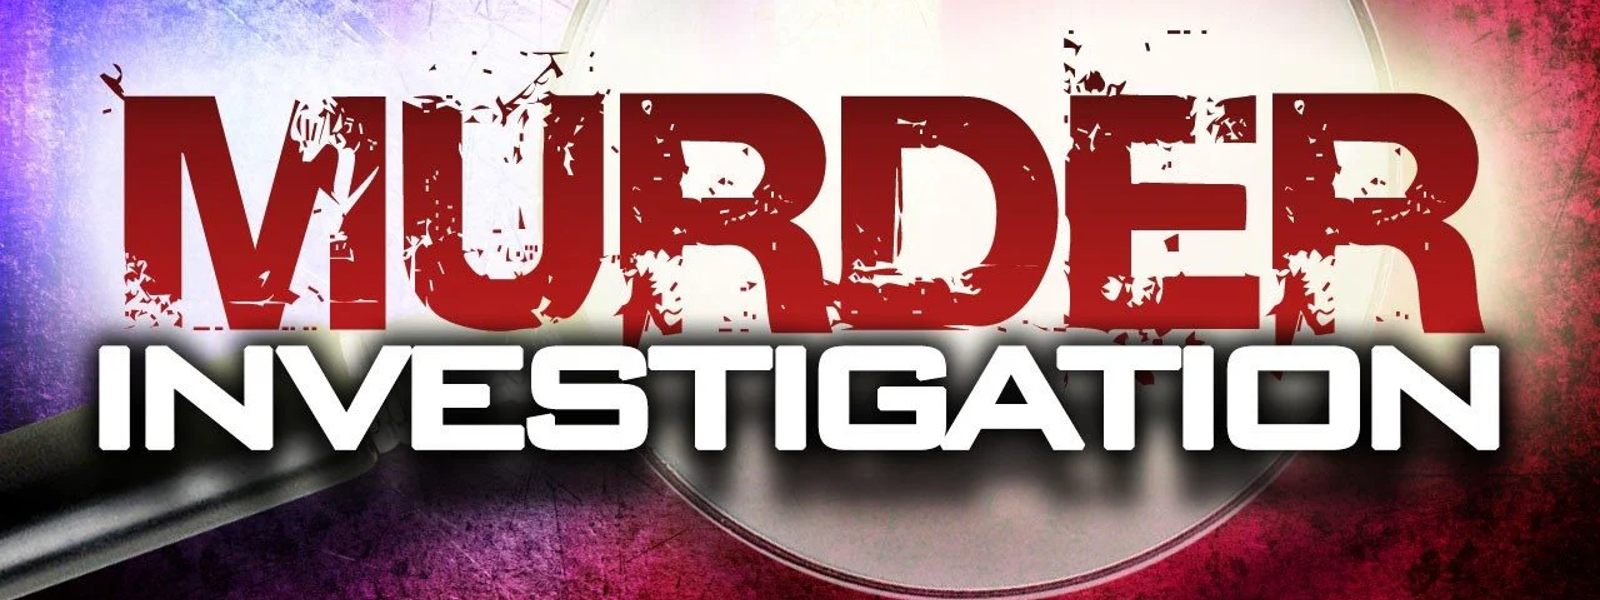 Triple Homicide in Minuwangoda, possible link to 2017 Kite Case